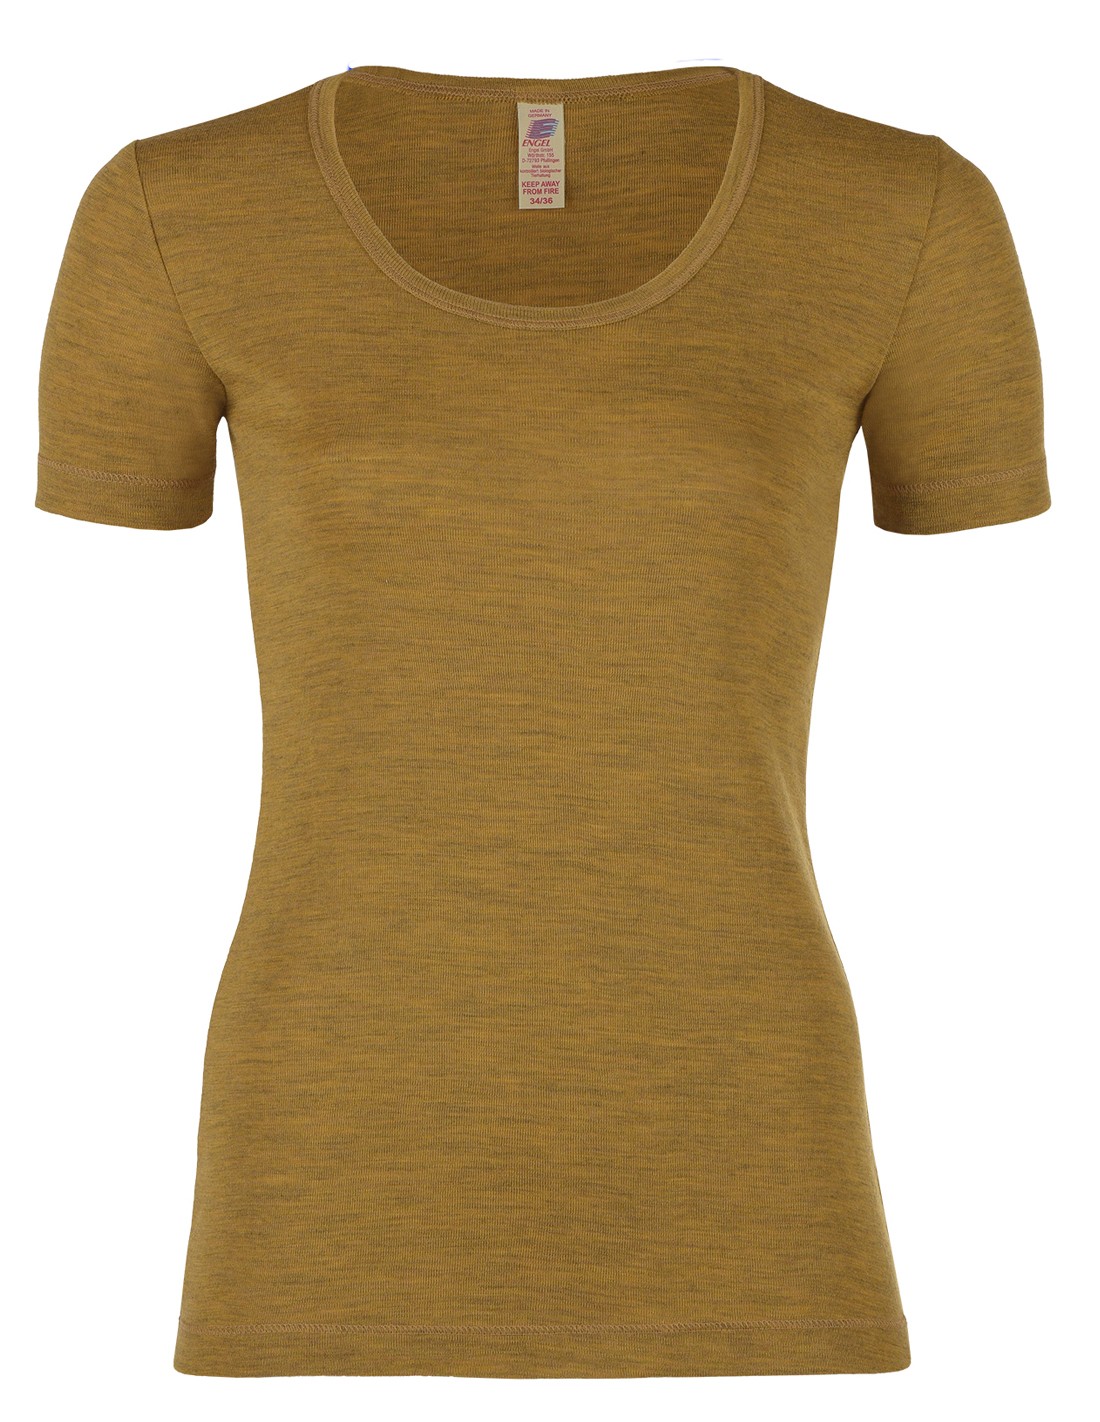 Image of Dames T-Shirt Merino Wol Engel Natur, Kleur Safraan, Maat 42/44 - Large